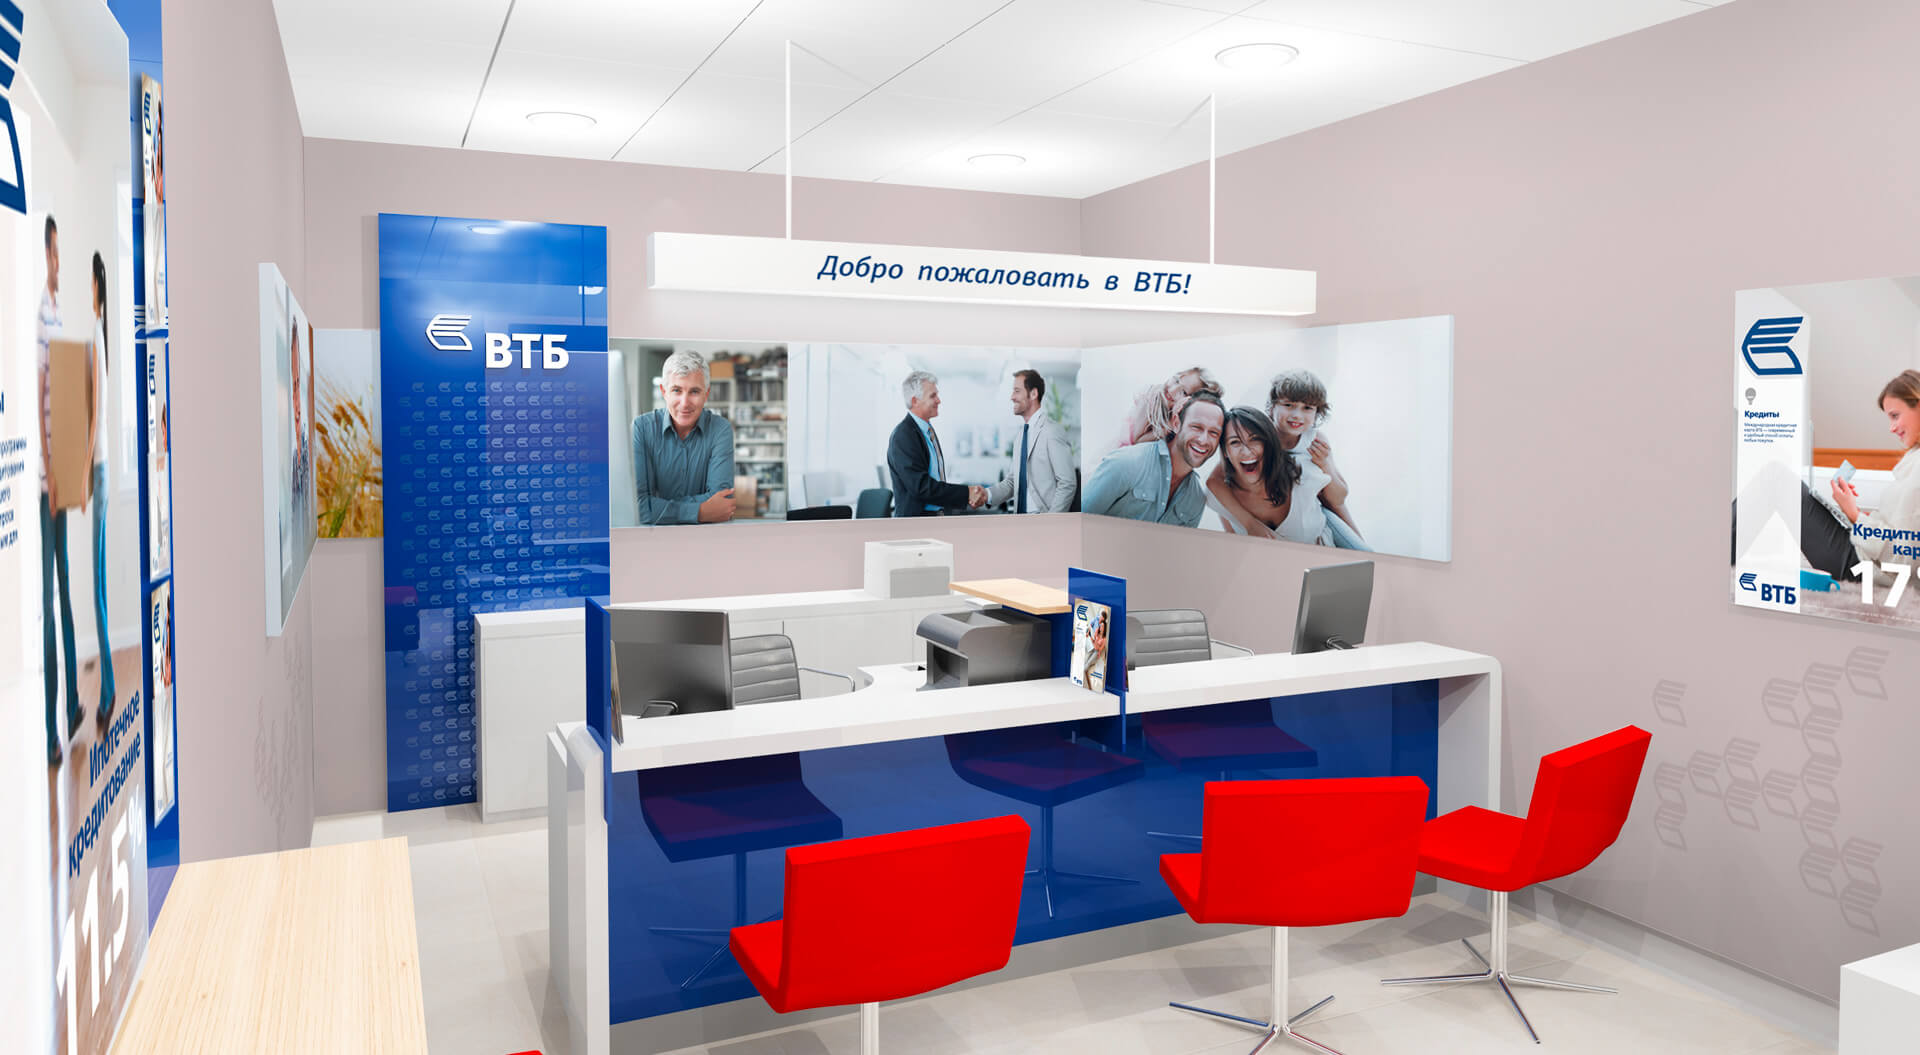 VTB convenience mini bank interior etail design, brand identity and marketing communications